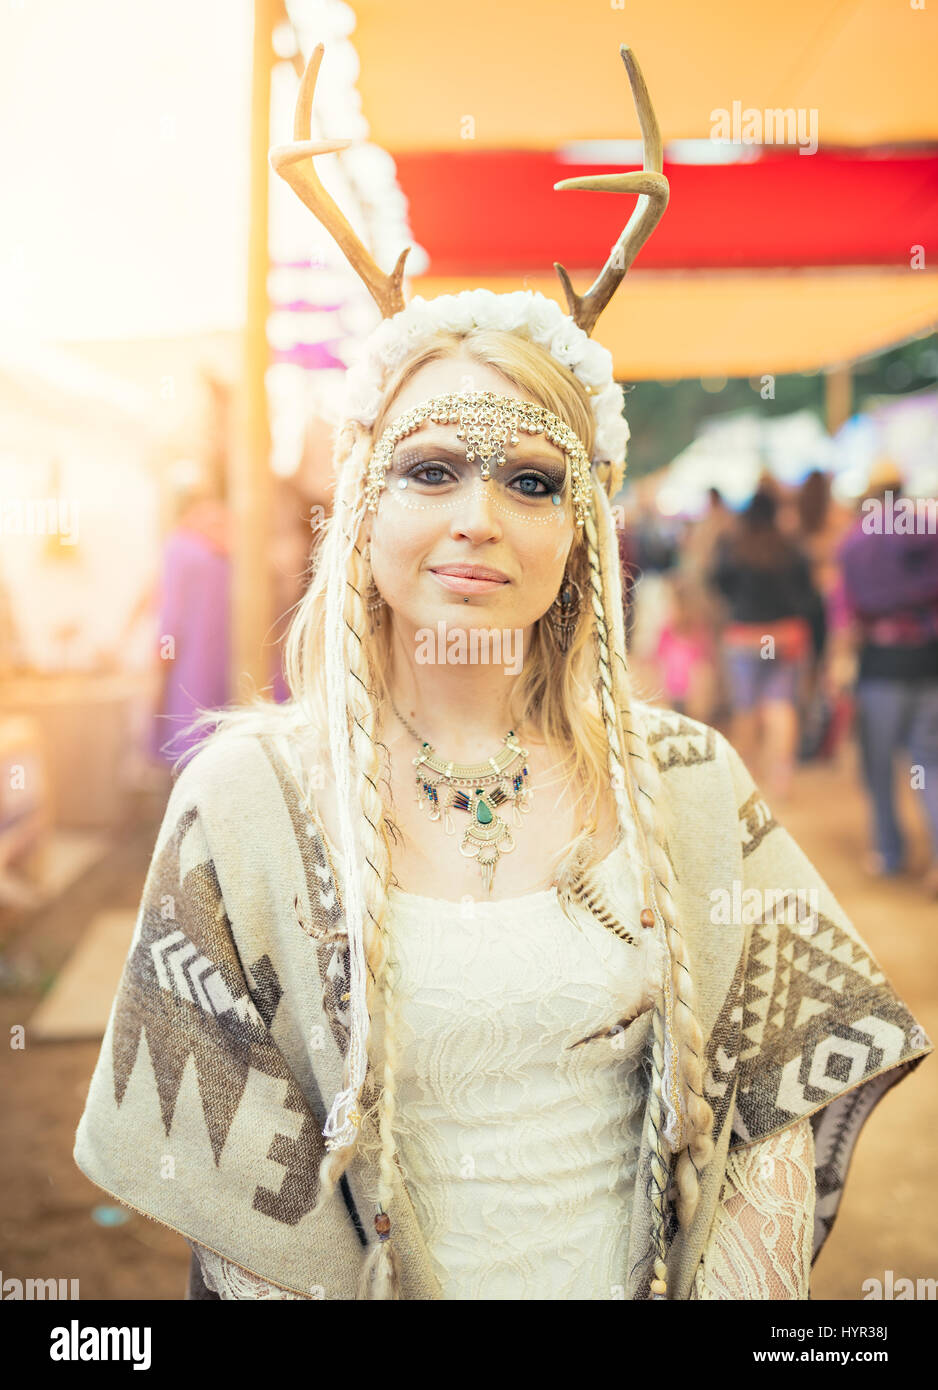 Female music festival attendee in costume. Stock Photo